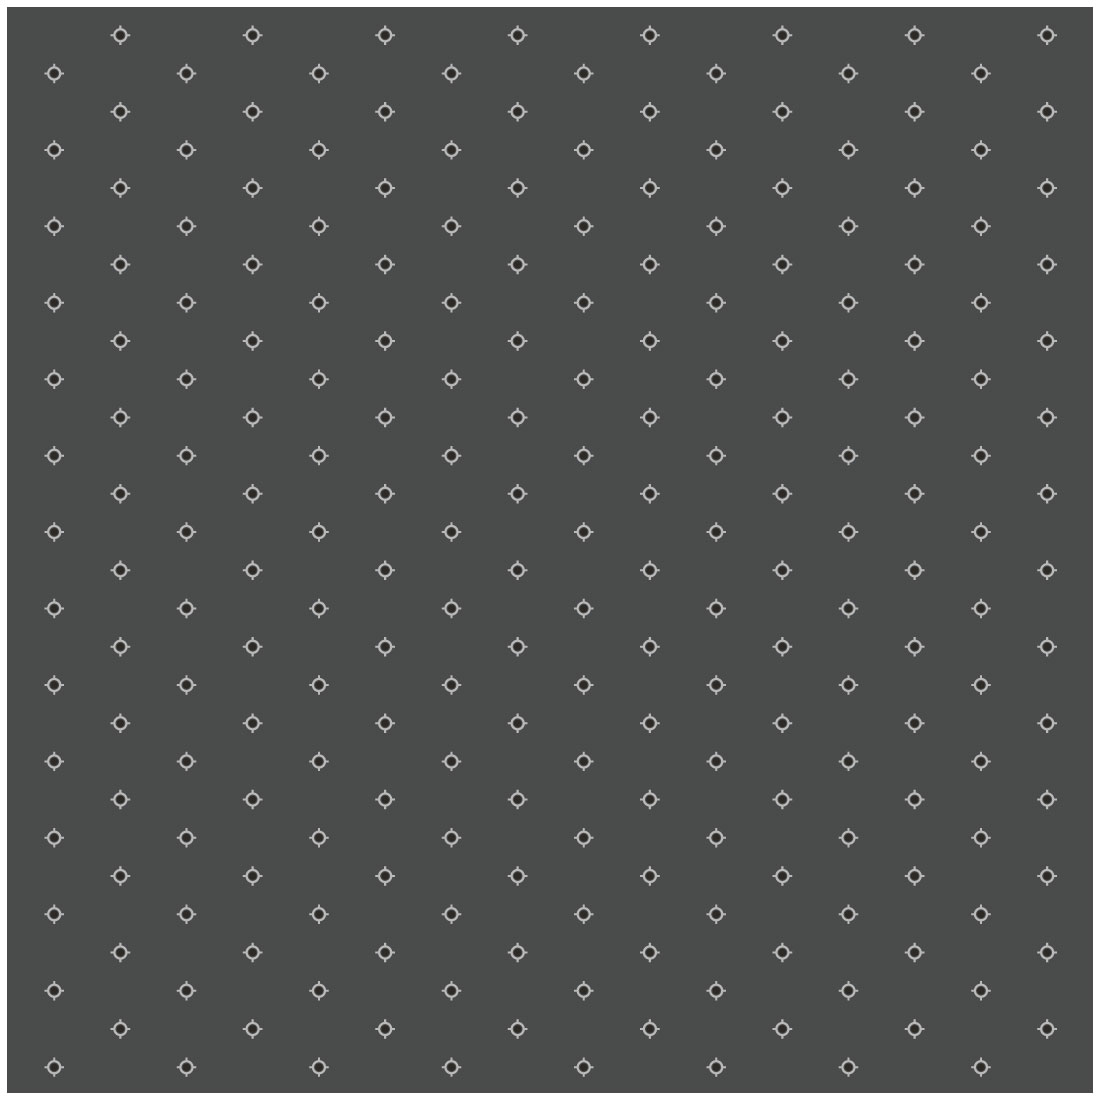 Geometric Minimal Patterns cover image.